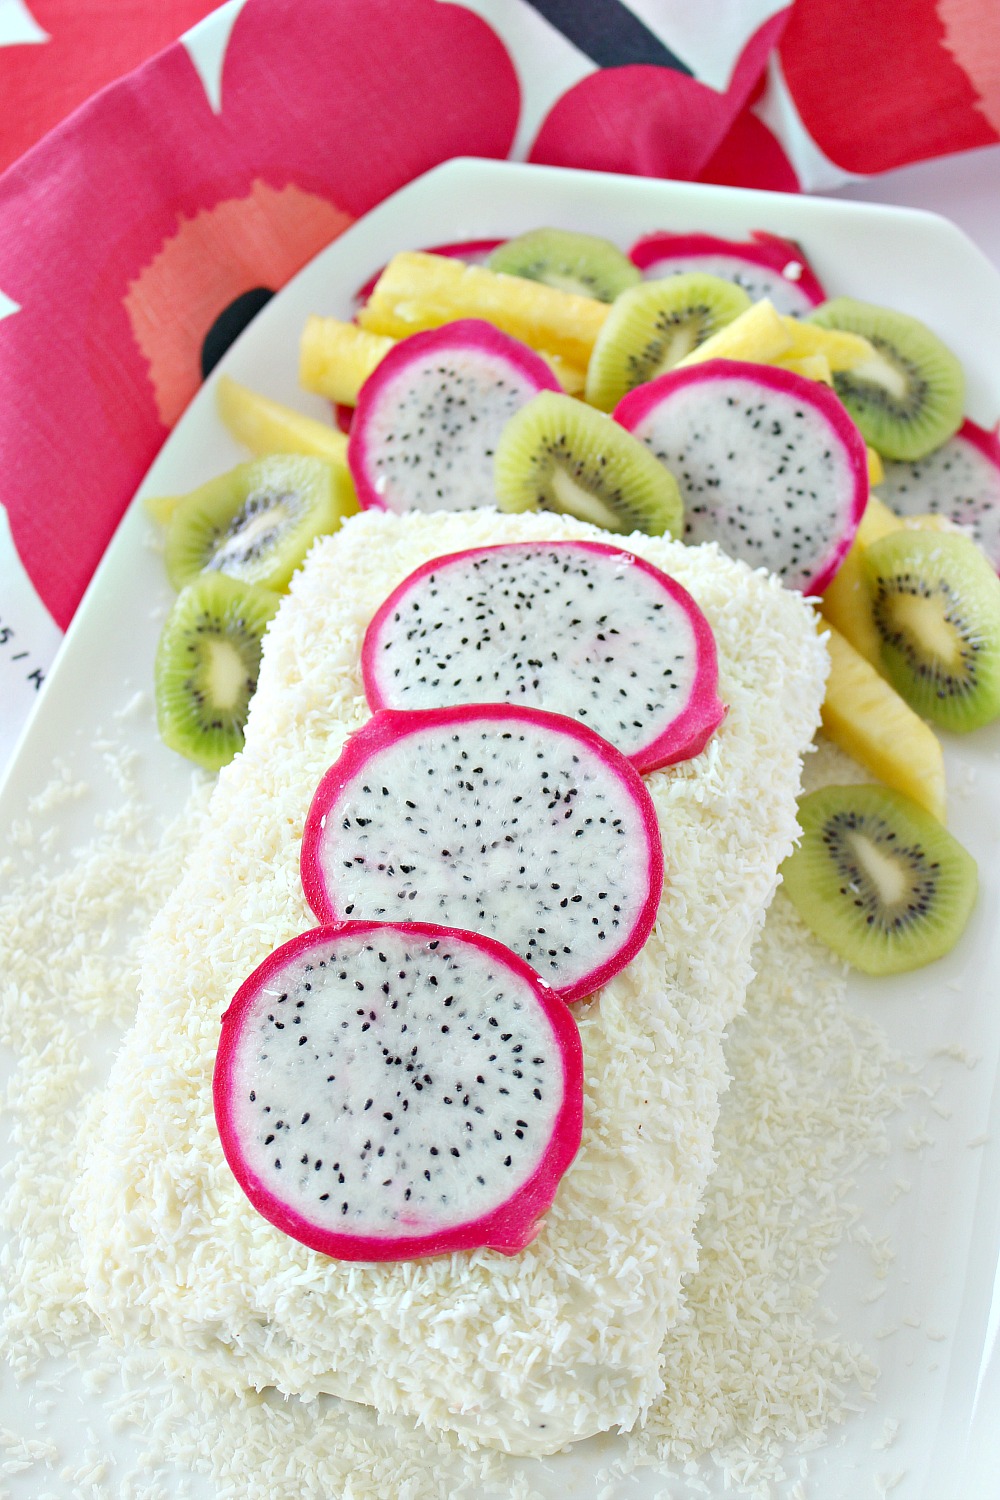 Cake decorated with fresh fruit